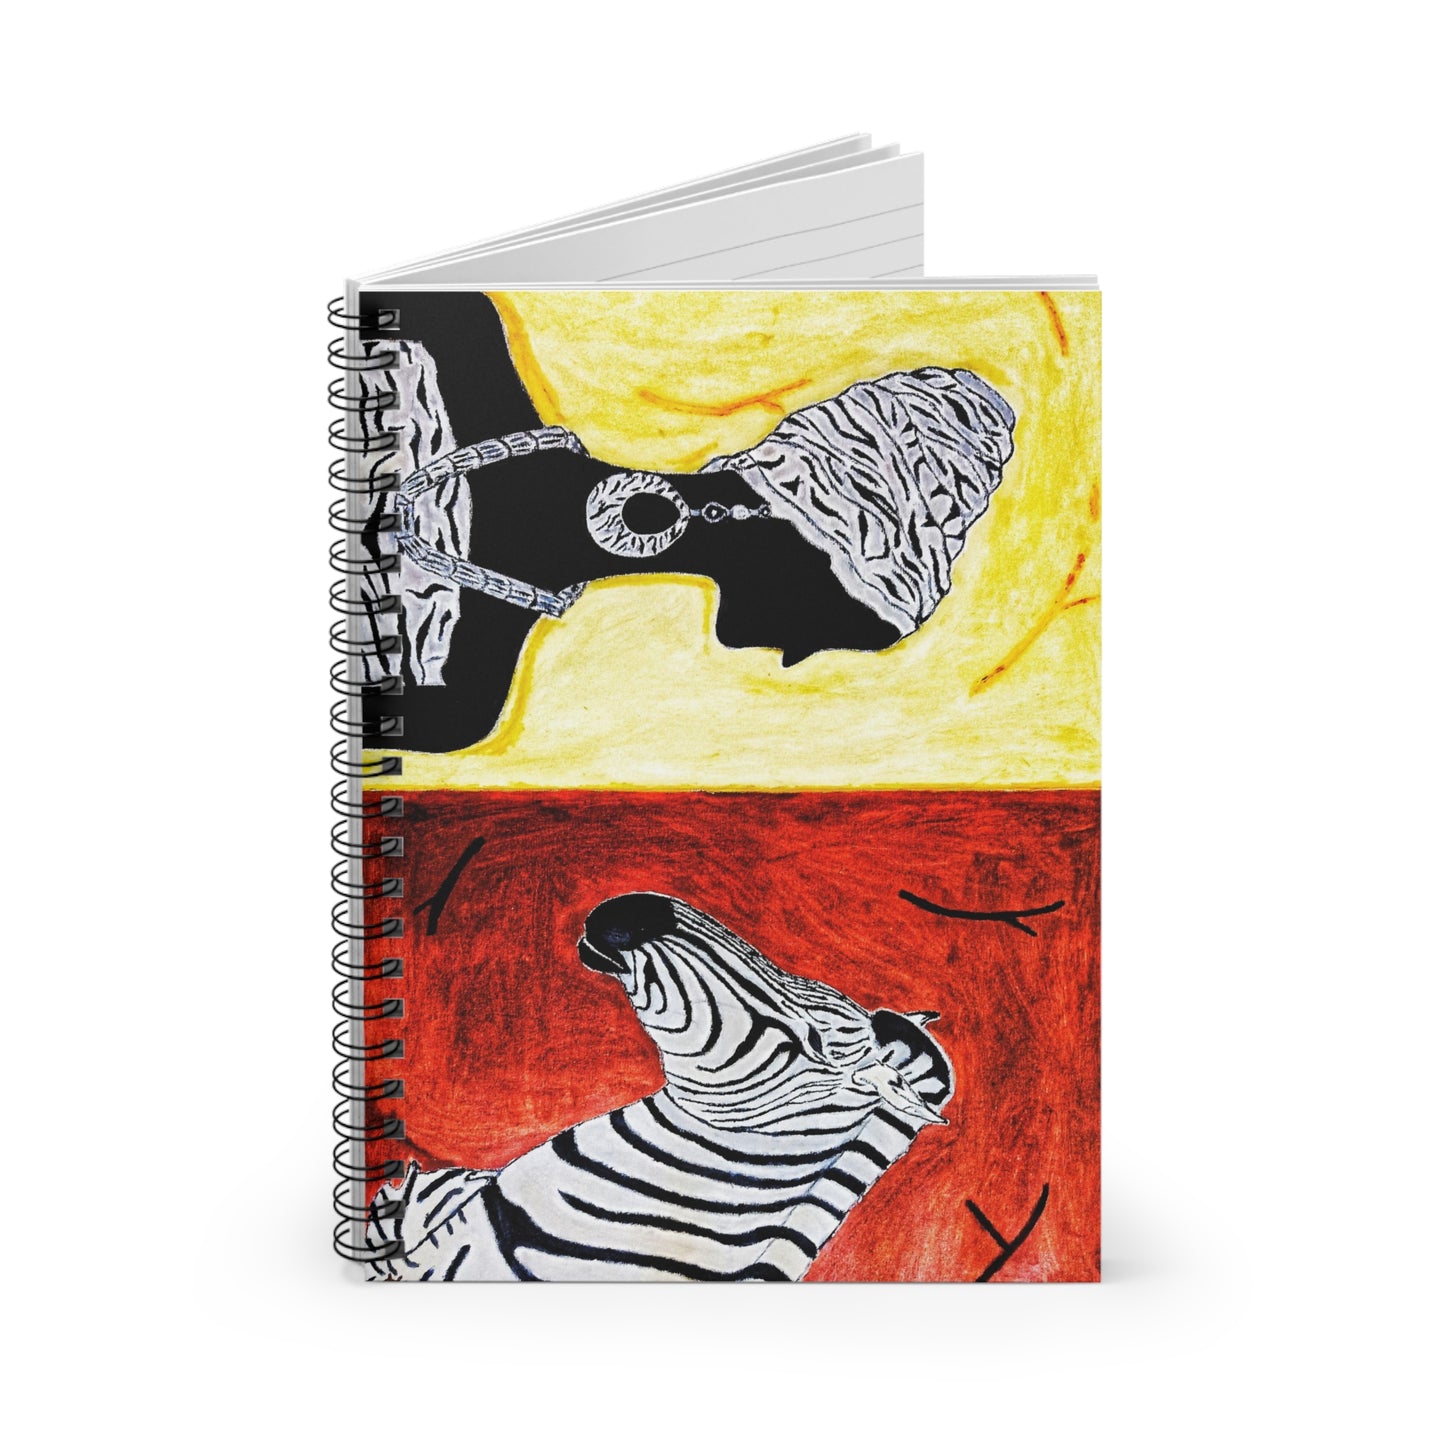 Turbo Yellow Zebra Spiral Notebook - Ruled Line